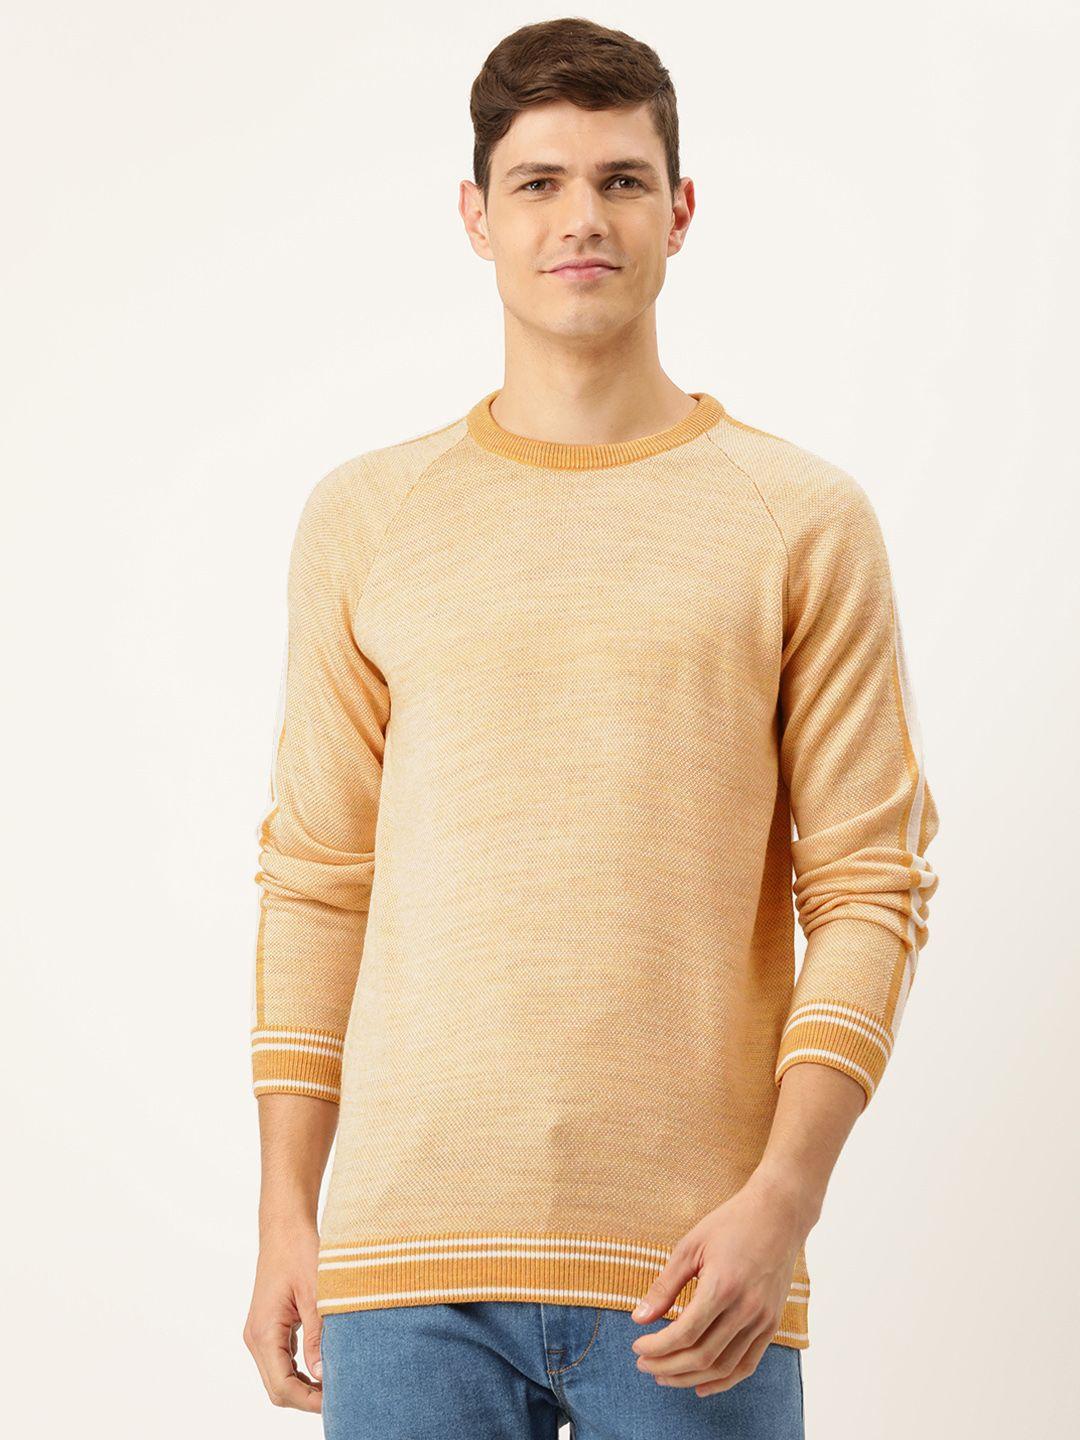 peter england university men tan brown pullover sweater